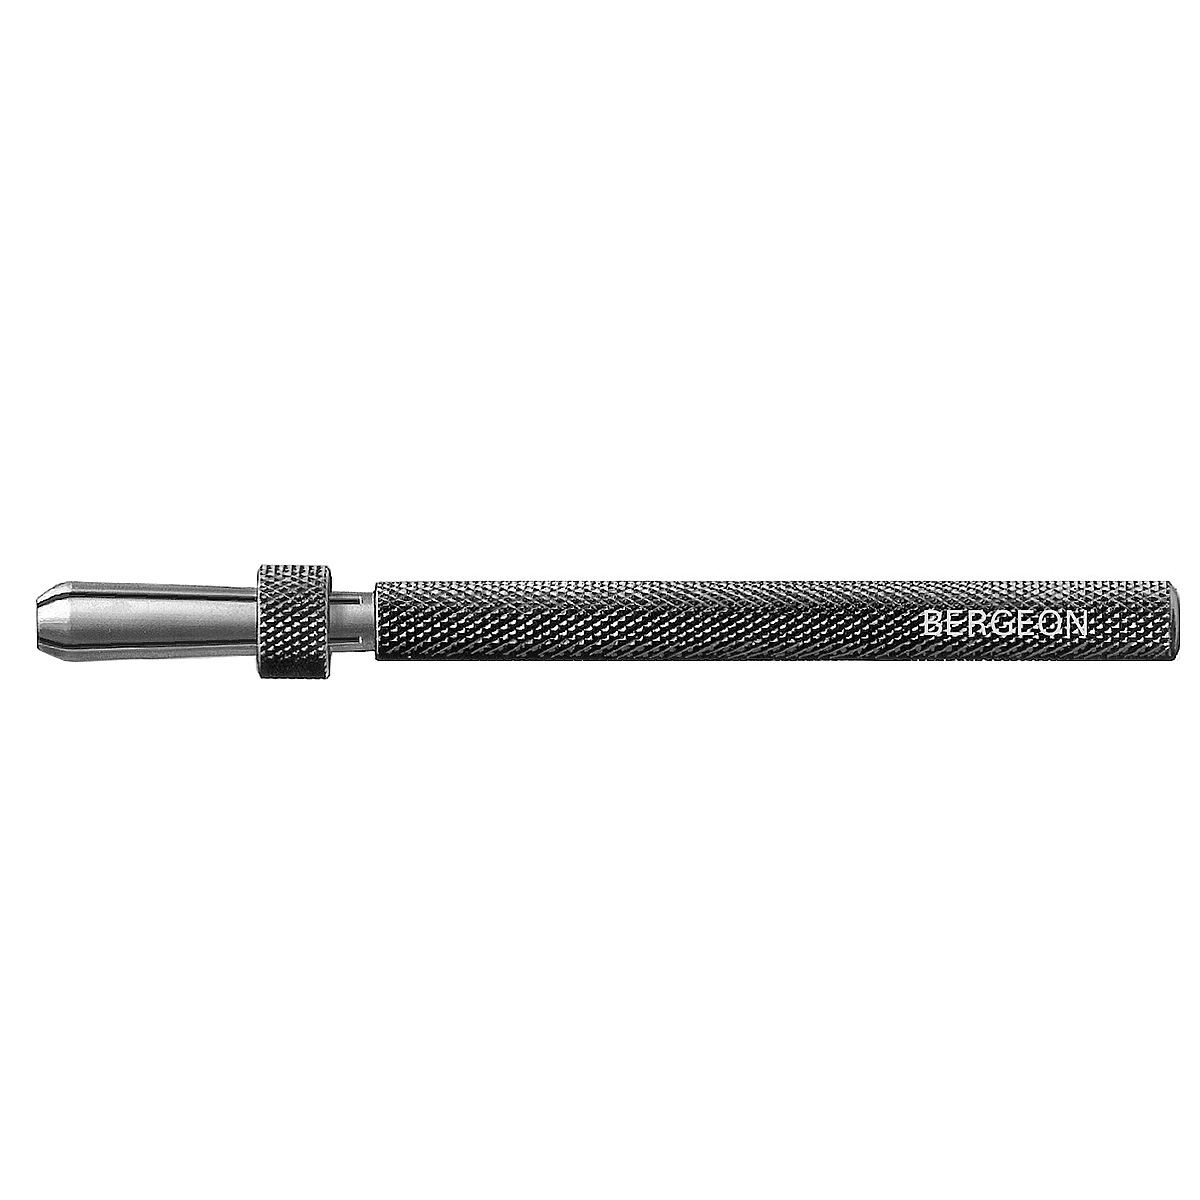 Bergeon 30432 pin vice with slide lock, clamping range 0 - 1,5 mm, length 110 mm